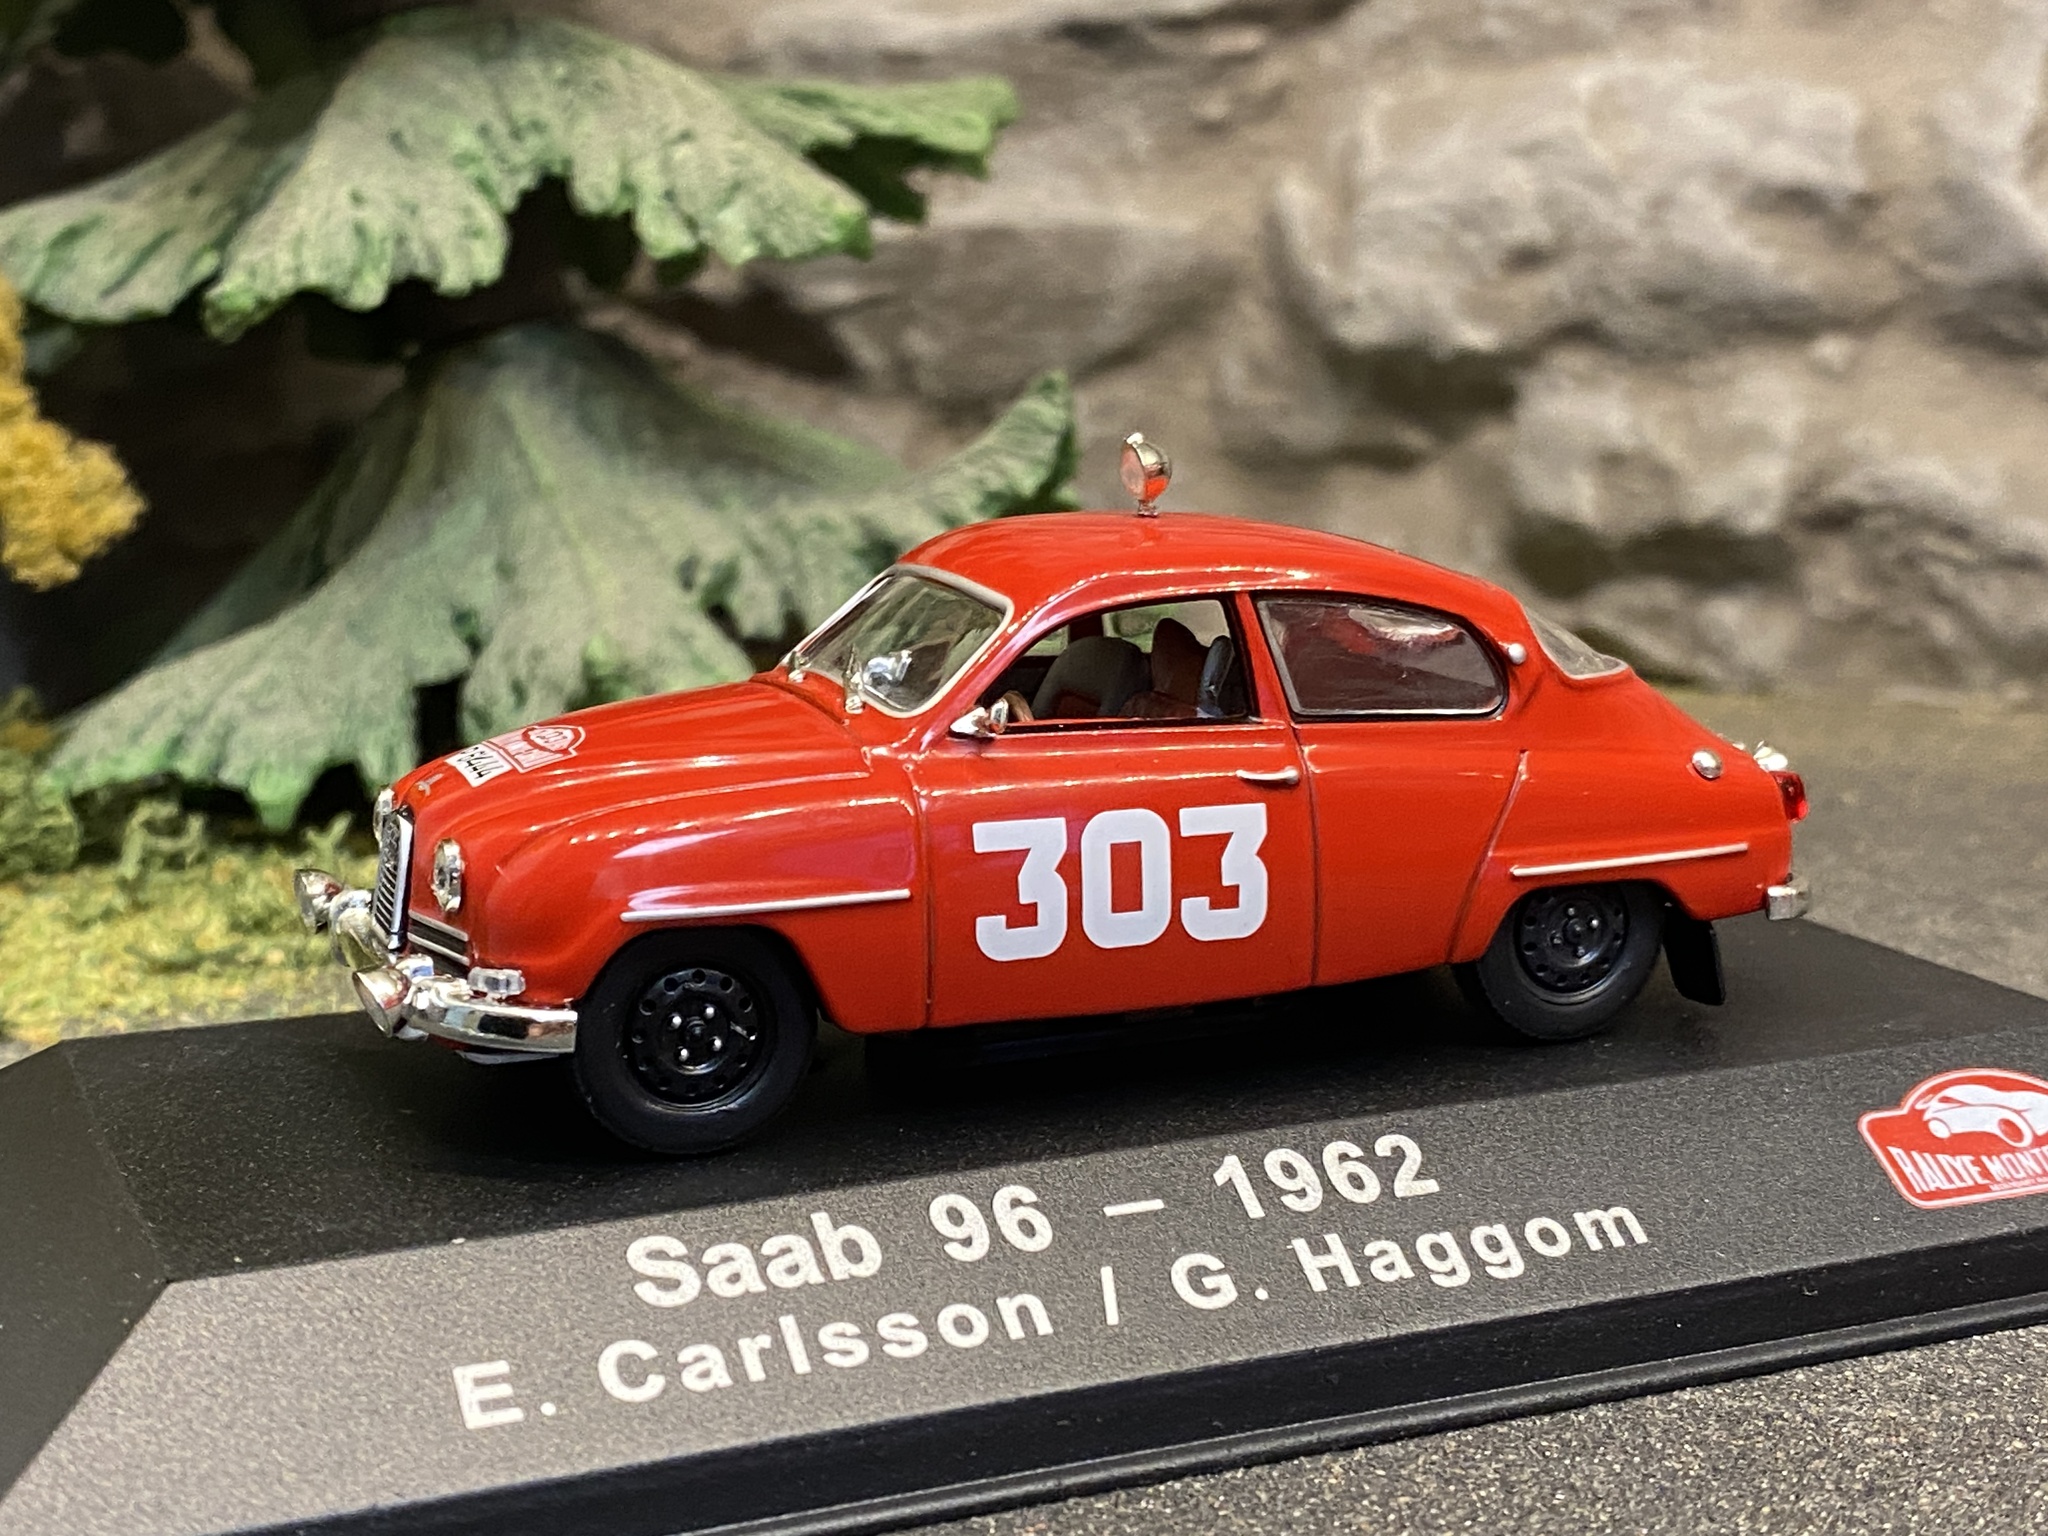 Skala 1/43 SAAB 96 1962, E.Carlsson/G.Haggom fr Atlas Editions/IXO Models